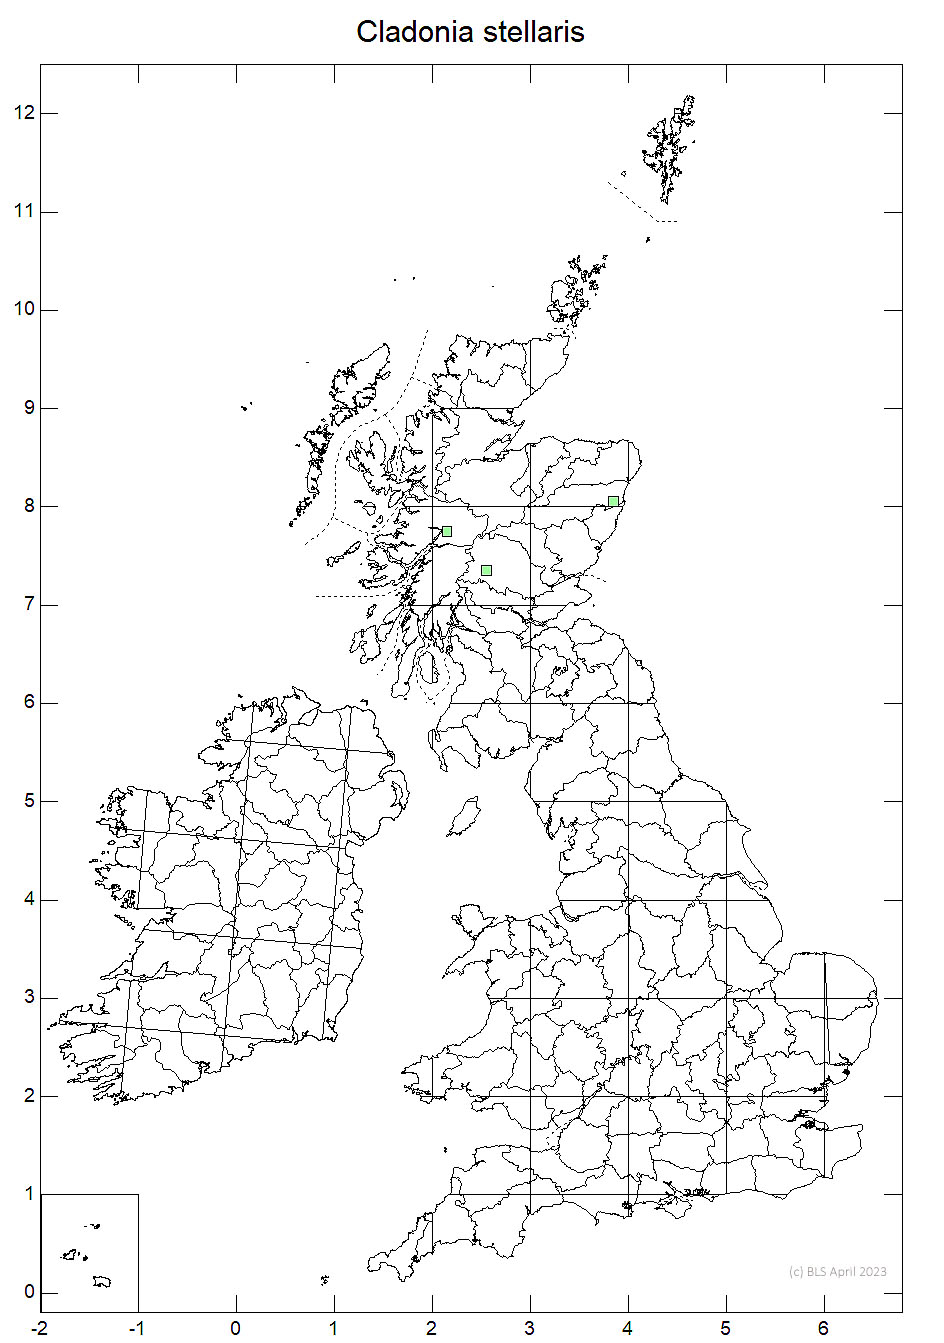 Cladonia stellaris 10km sq distribution map